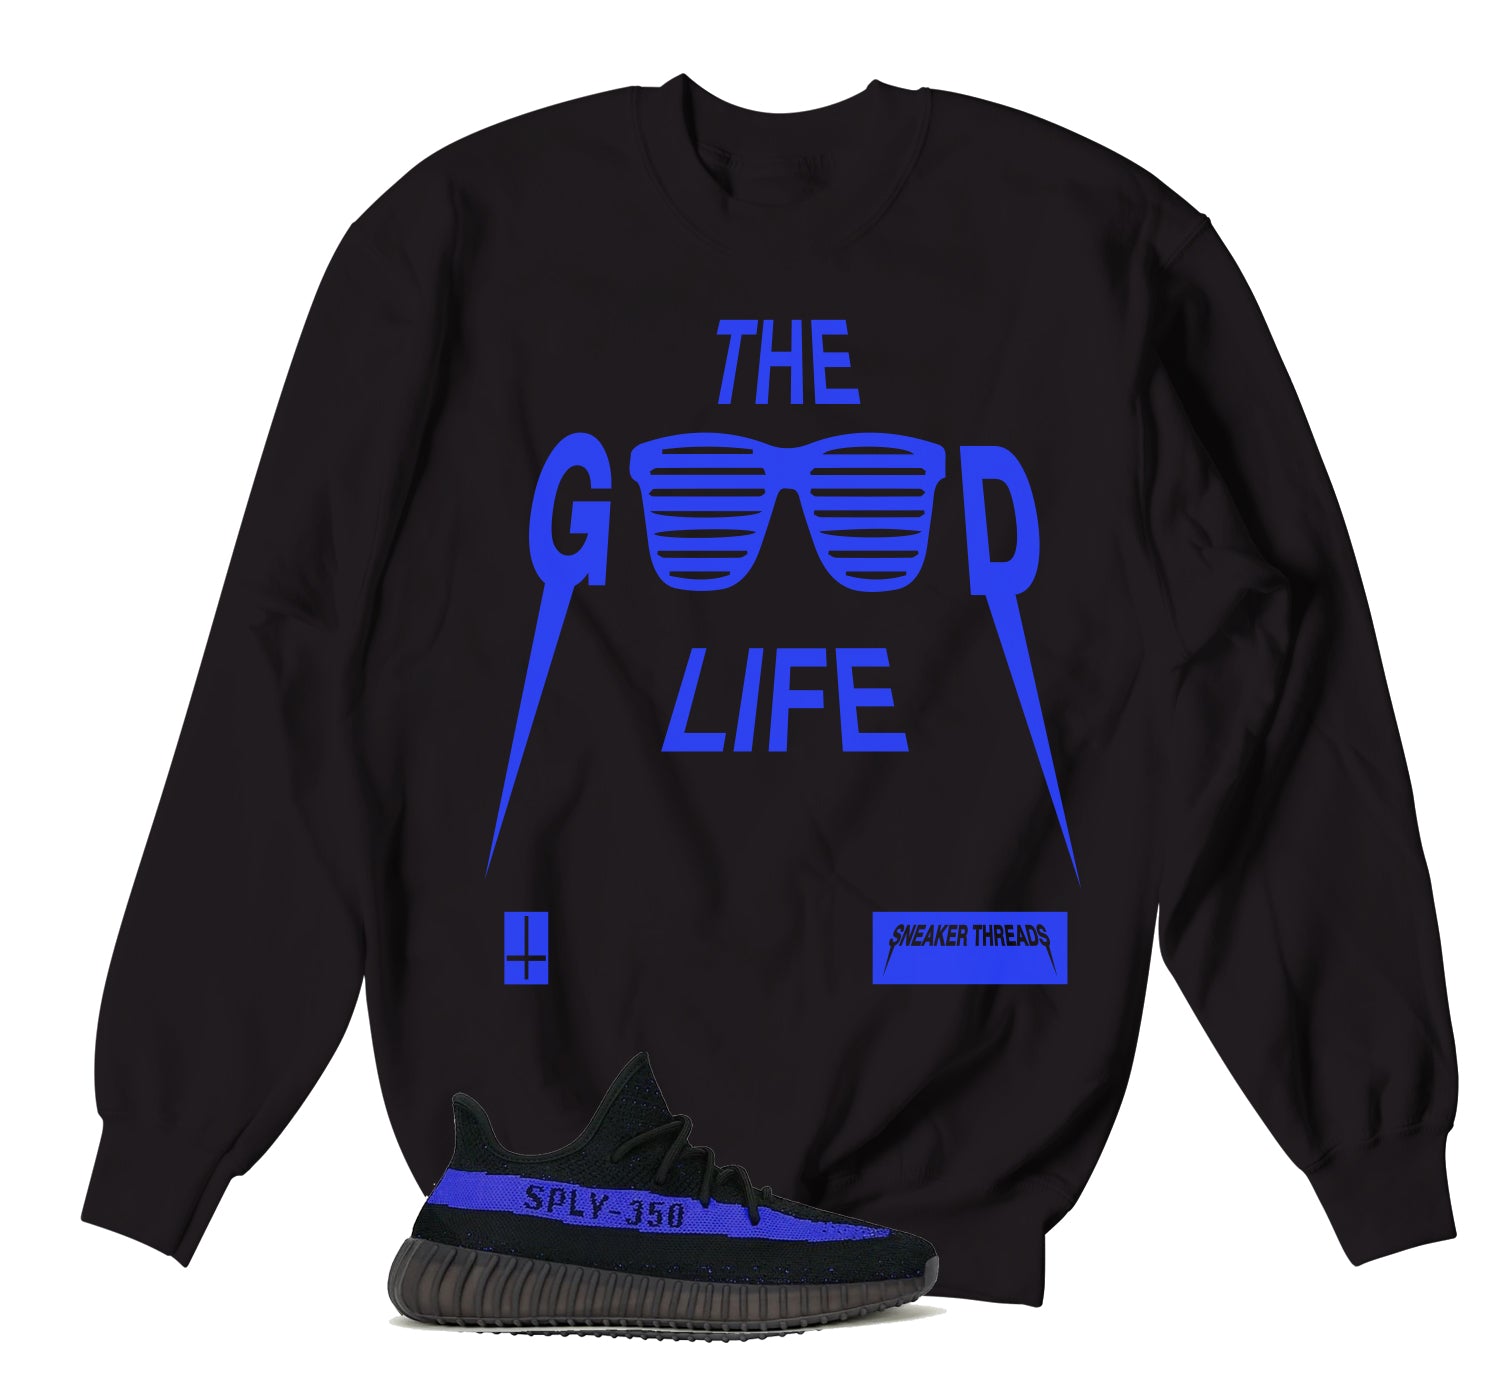 Dazzling Blue Sweater -  Good Life - Black